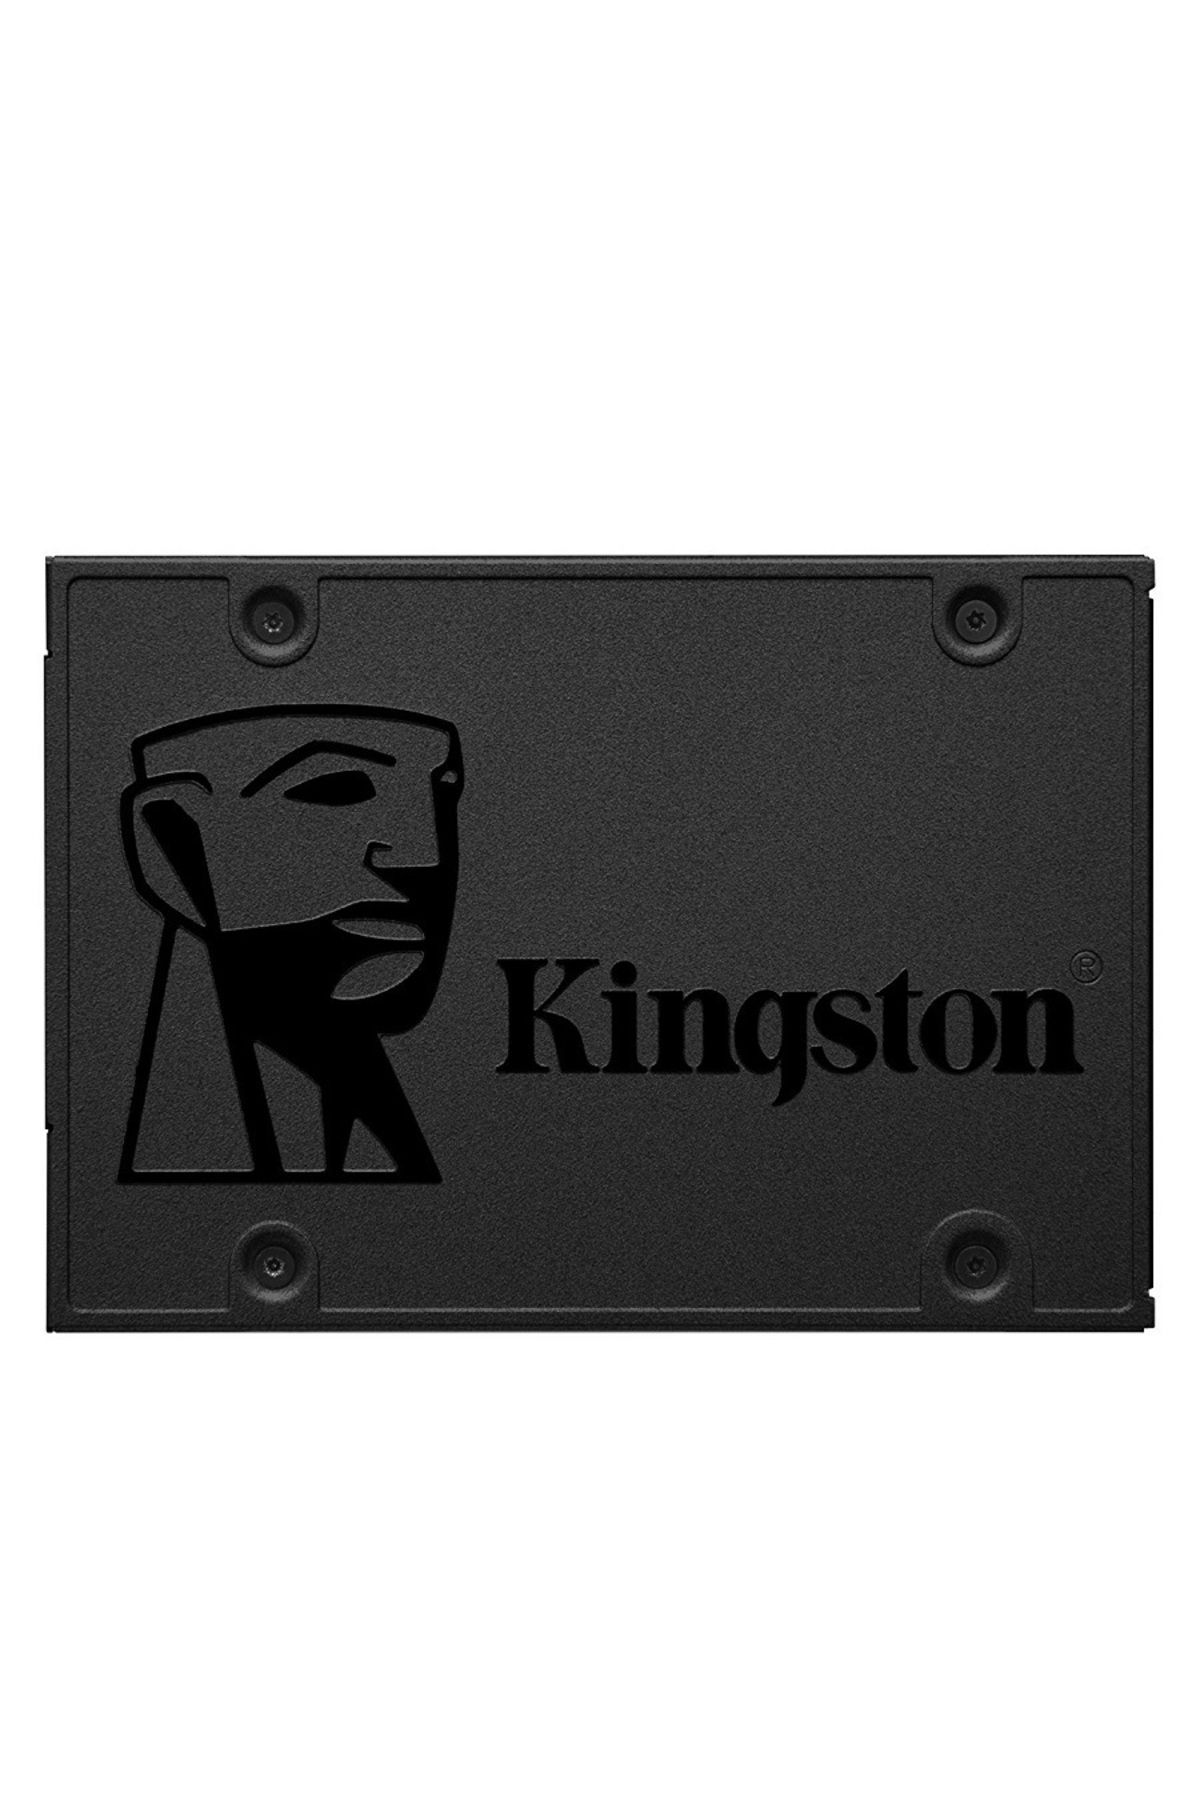 Kingston A400 Ssdnow 240gb 2.5" 500mb/350mb/s Sata3 Ssd Disk - Sa400s37/240g